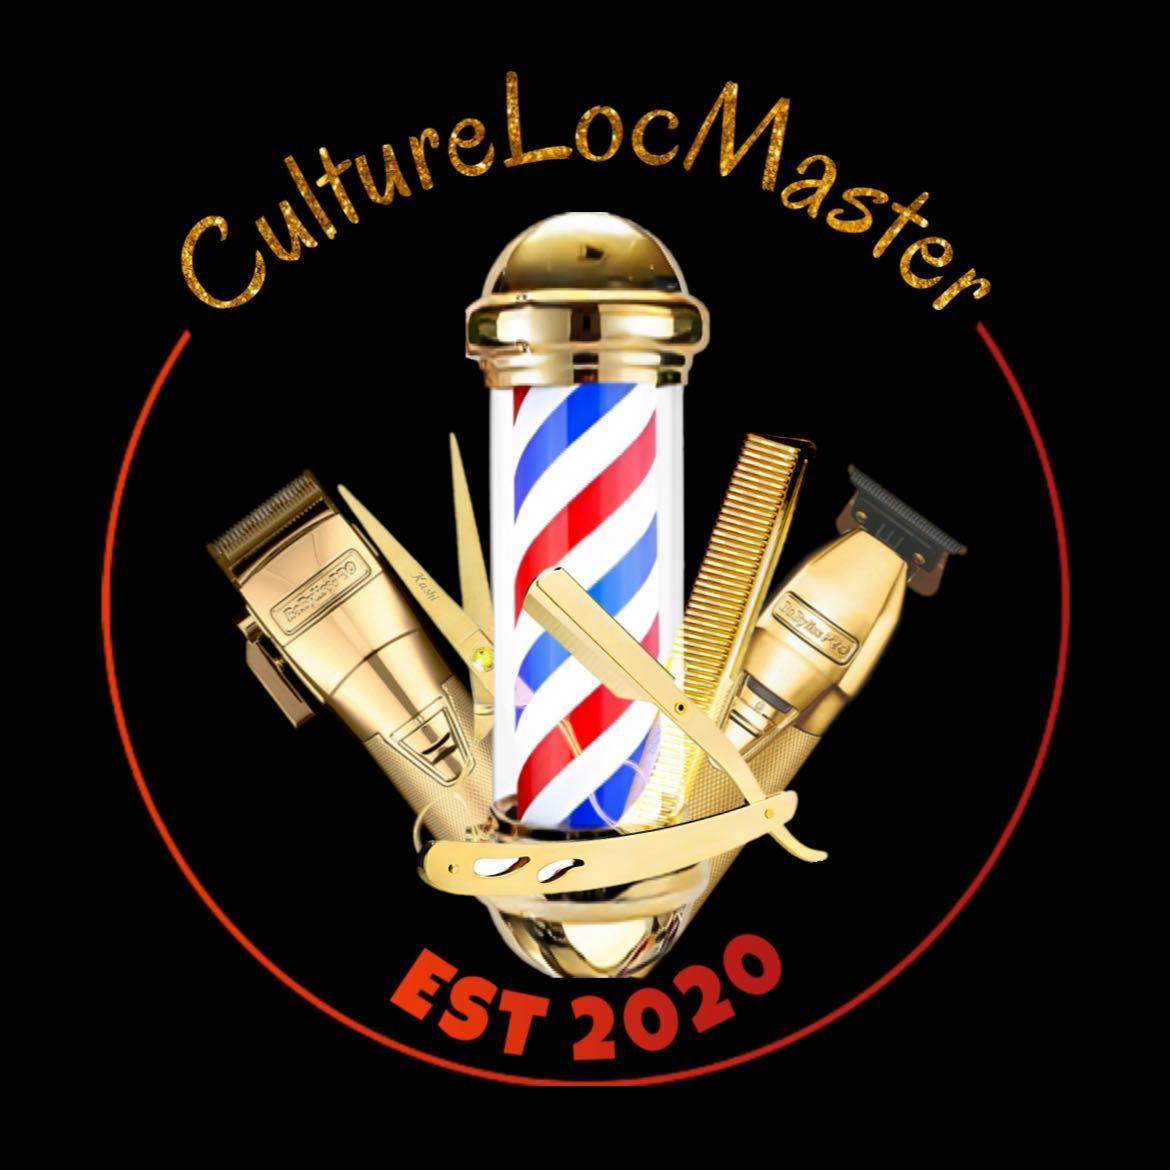 Culturelocmaster, 7030 Smith Blvd, B, Charlotte, 28269